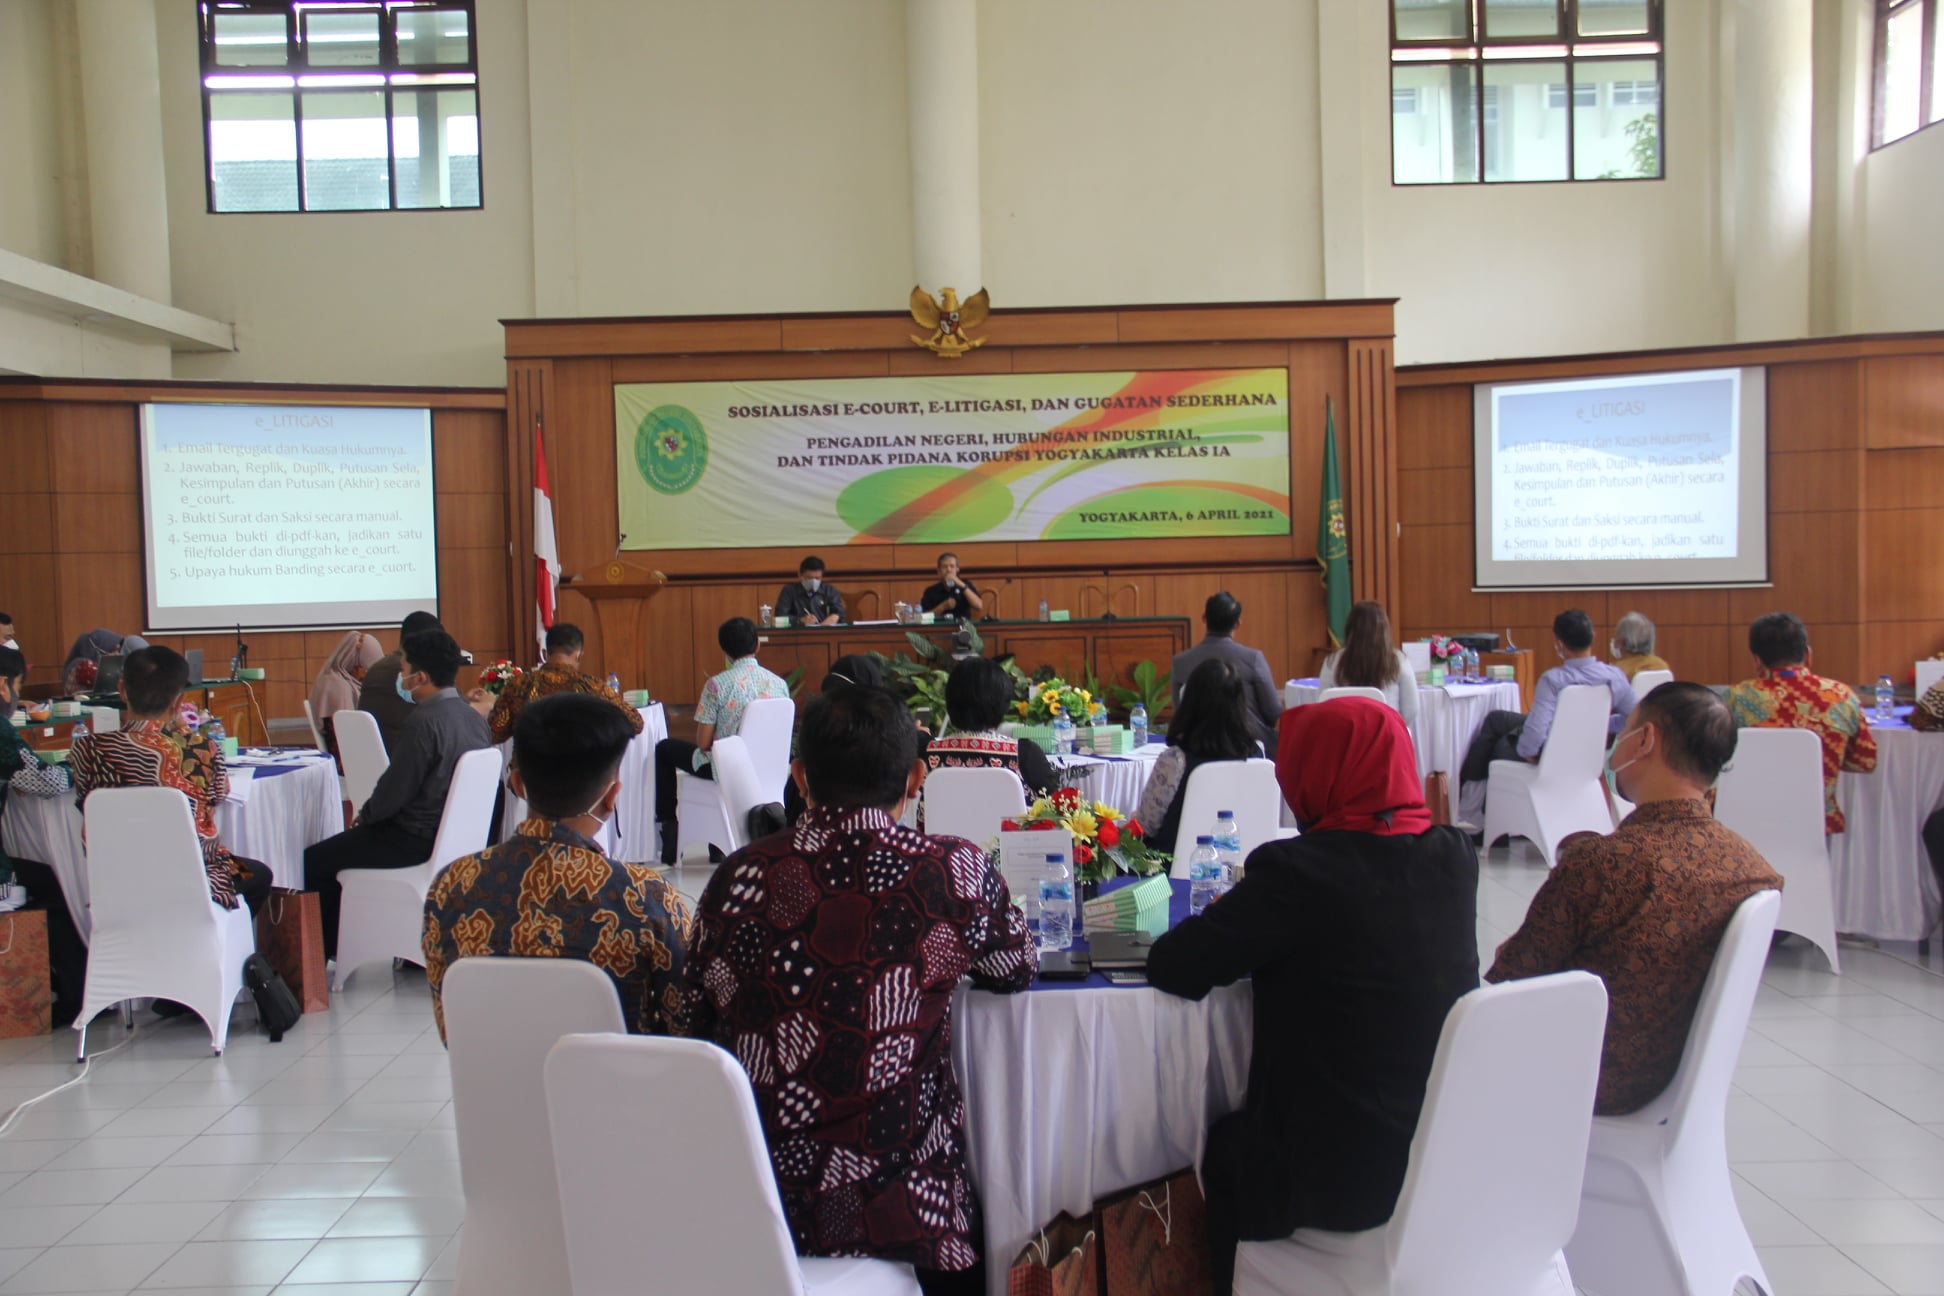 Sosialisasi e-Court, e-Litigasi dan Gugatan Sederhana serta Launching Aplikasi LIDYA (Layanan Informasi Digital Pengadilan Negeri Yogyakarta)